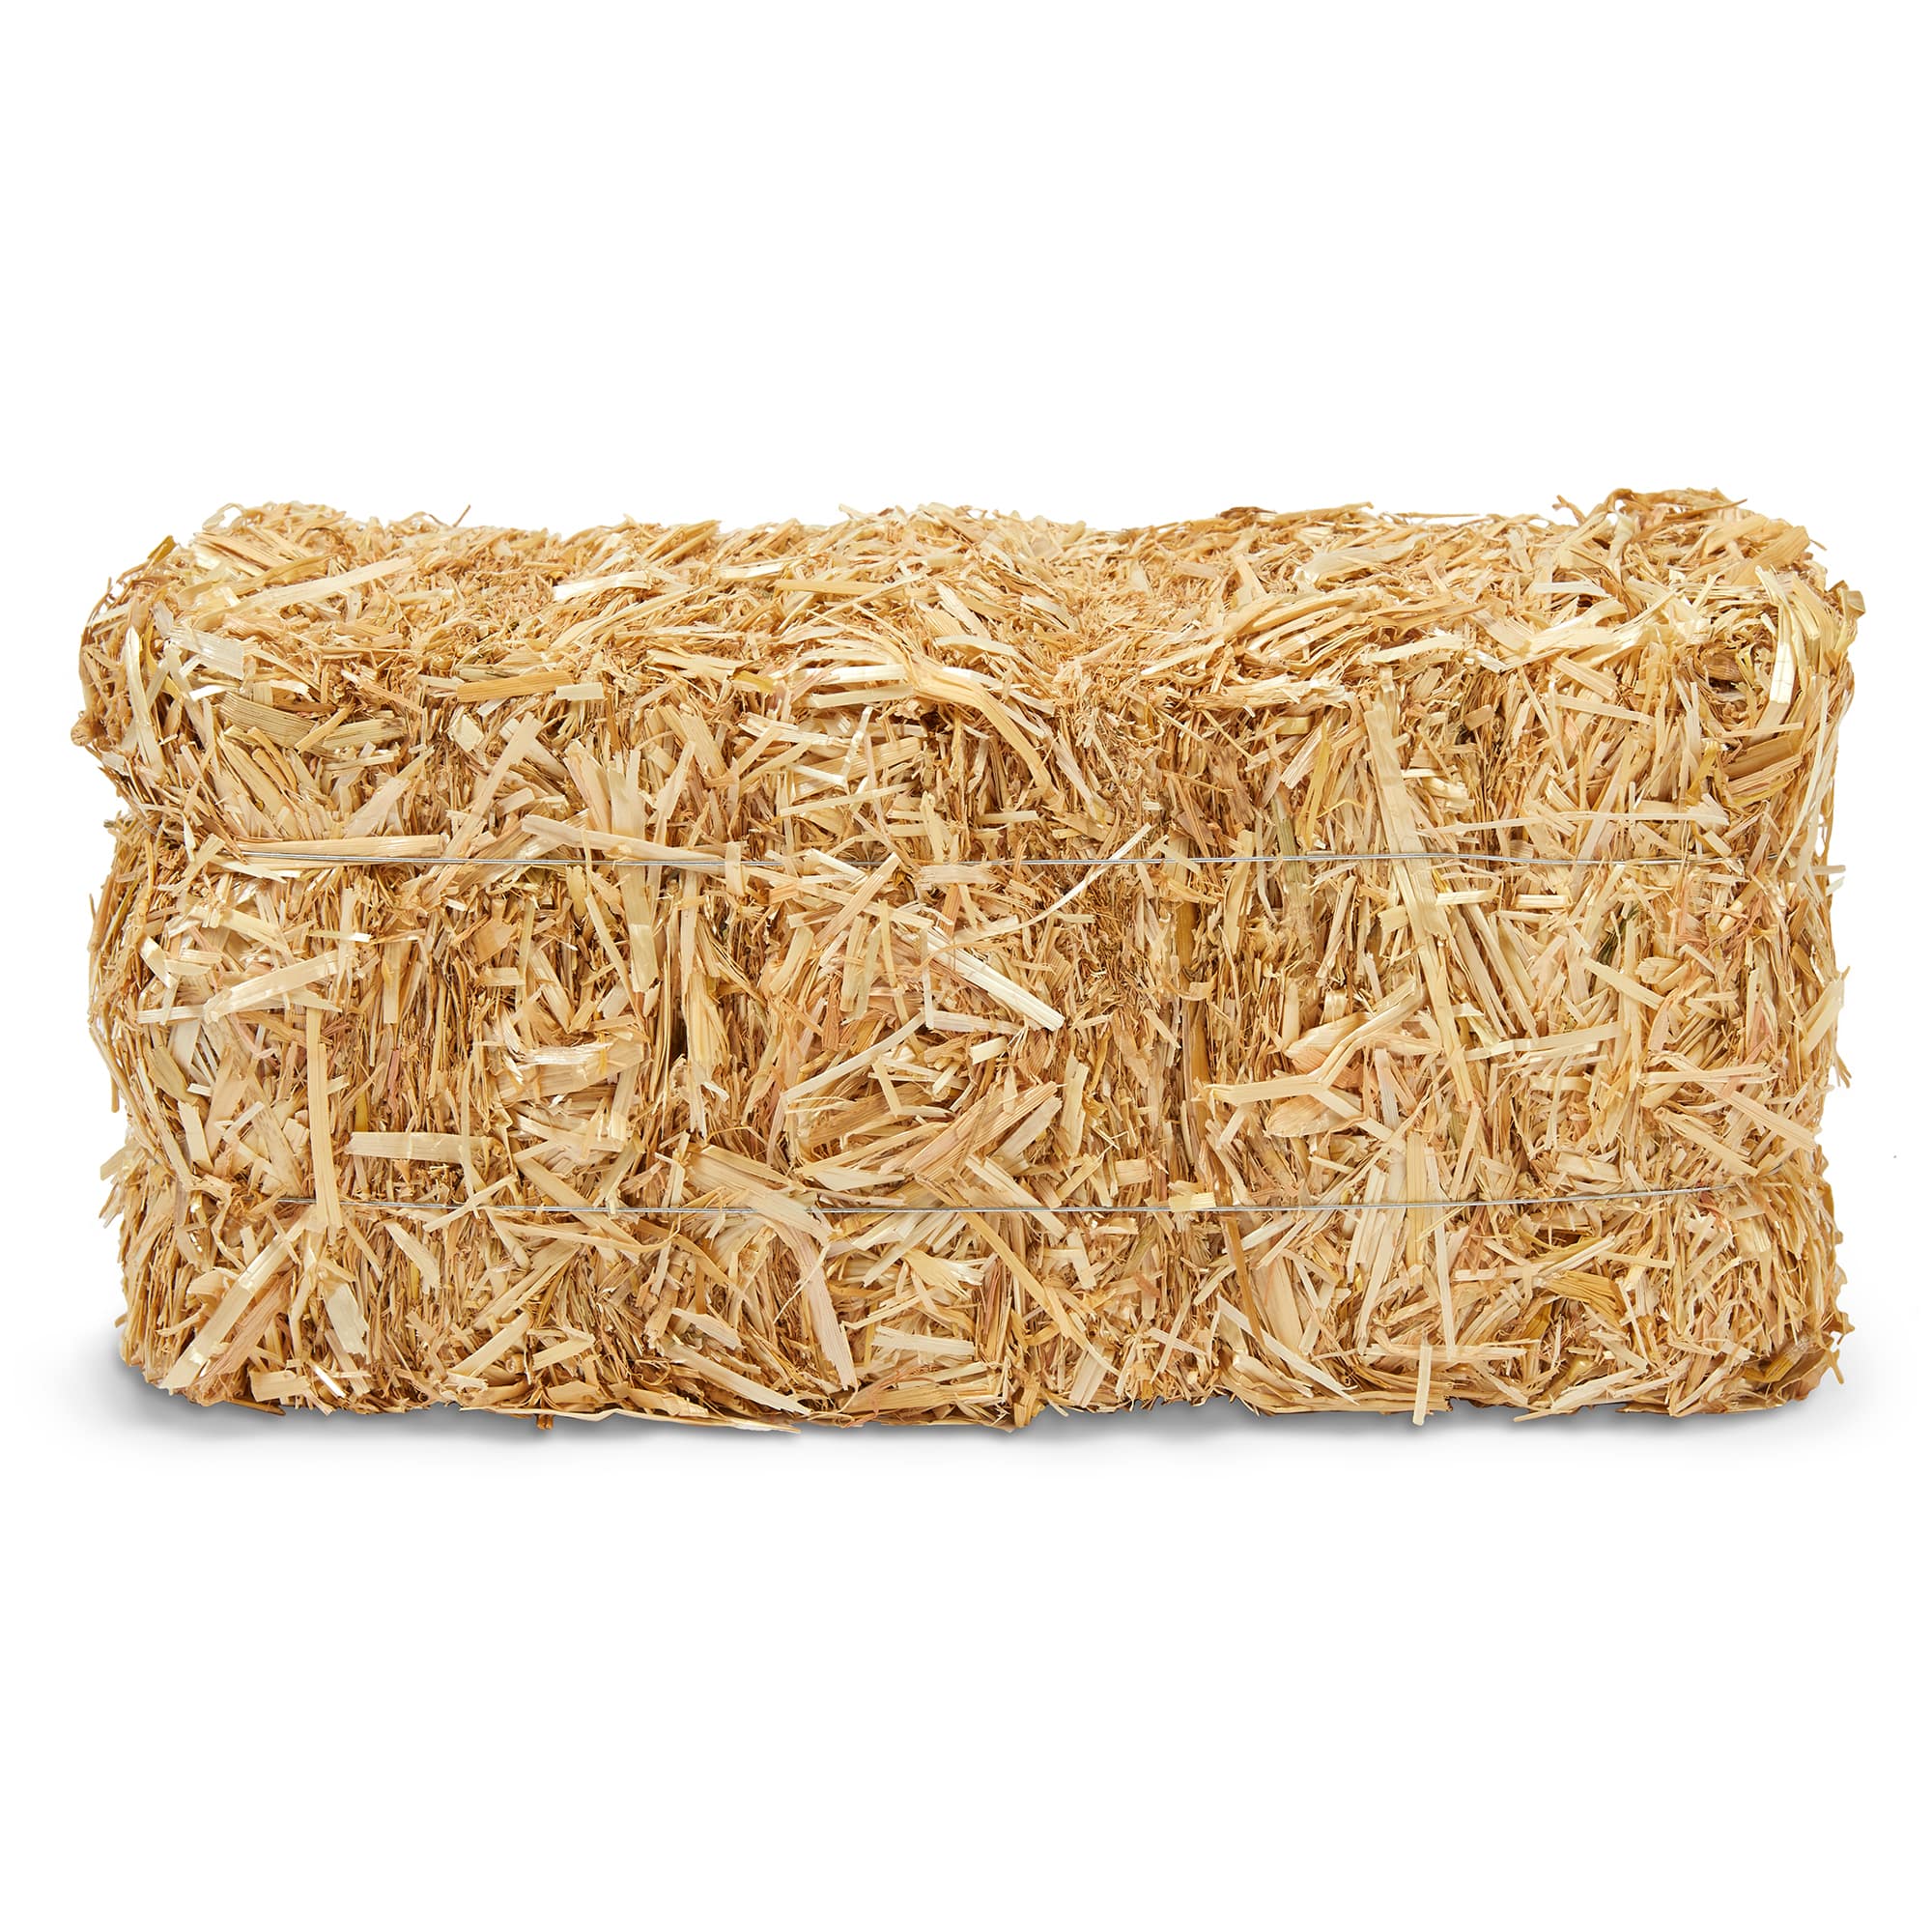 Floracraft Decorative Straw Hay Bale 24